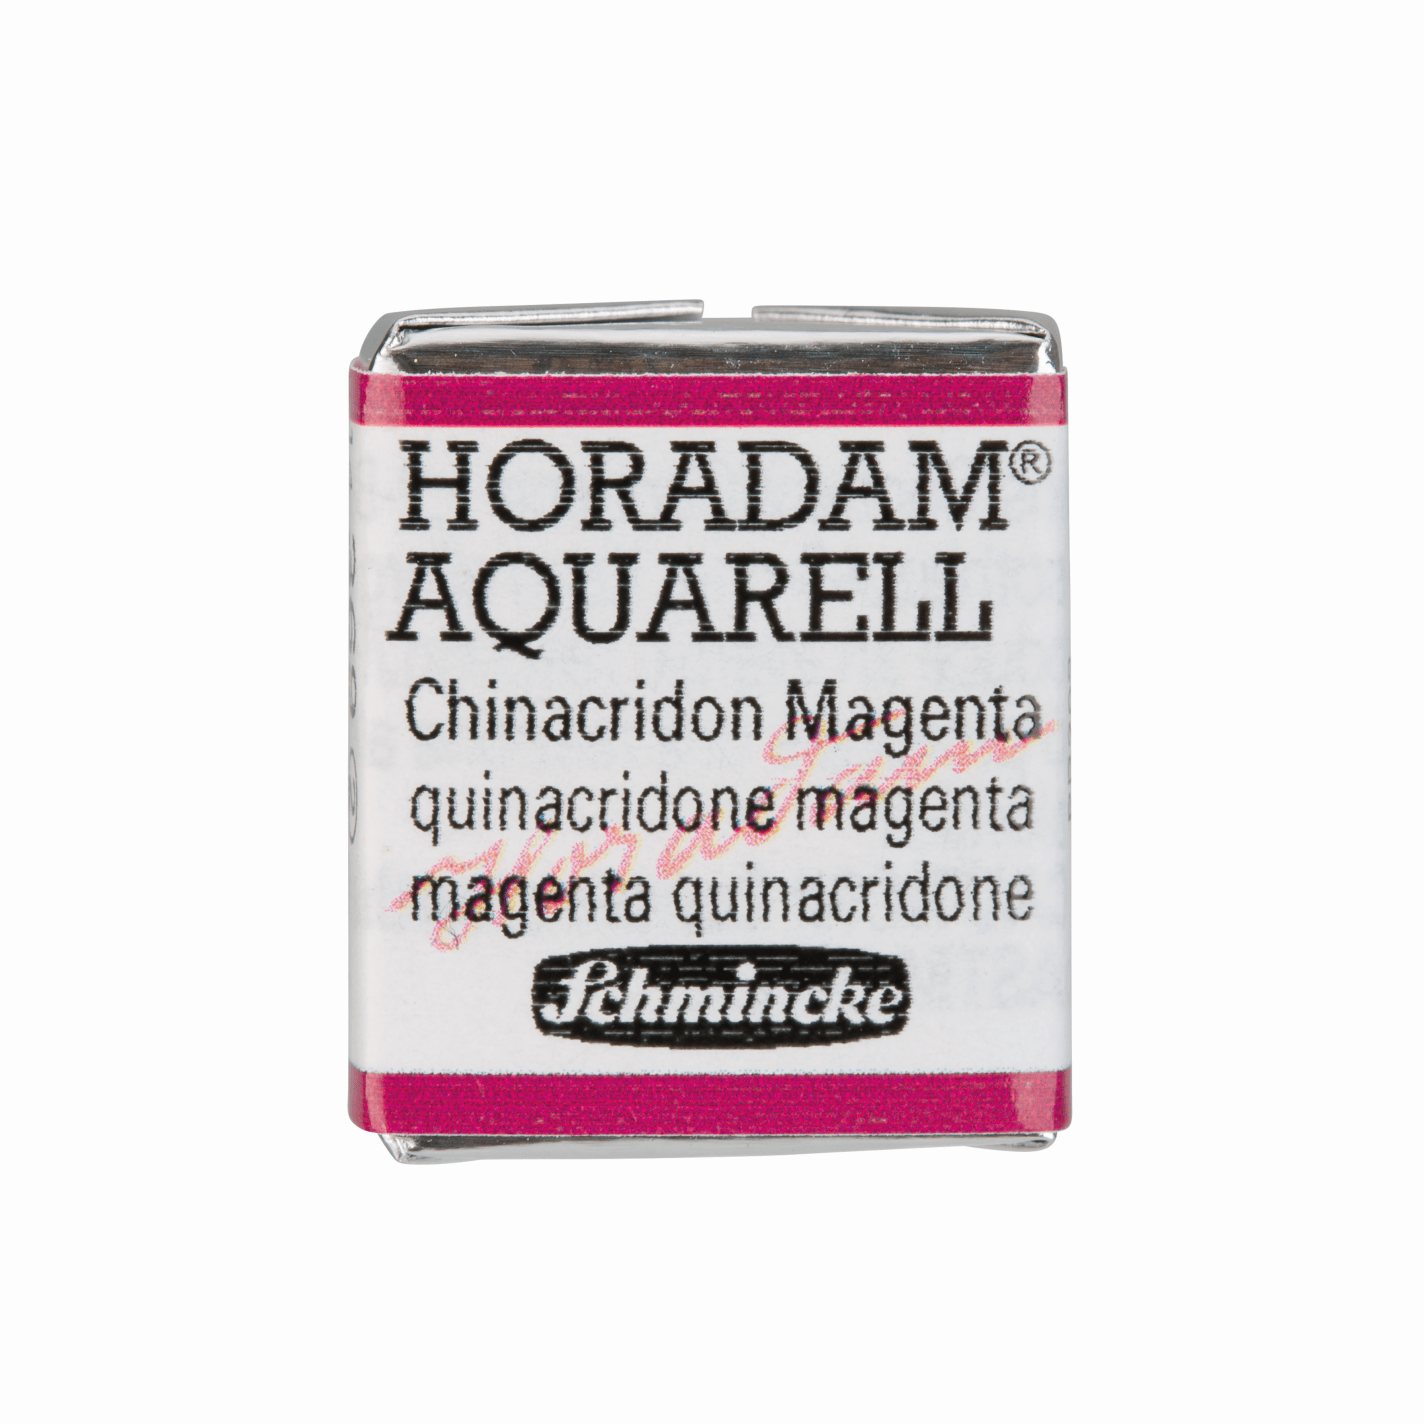 Schmincke Horadam Aquarell pans 1/2 pan Quinacridone Magenta